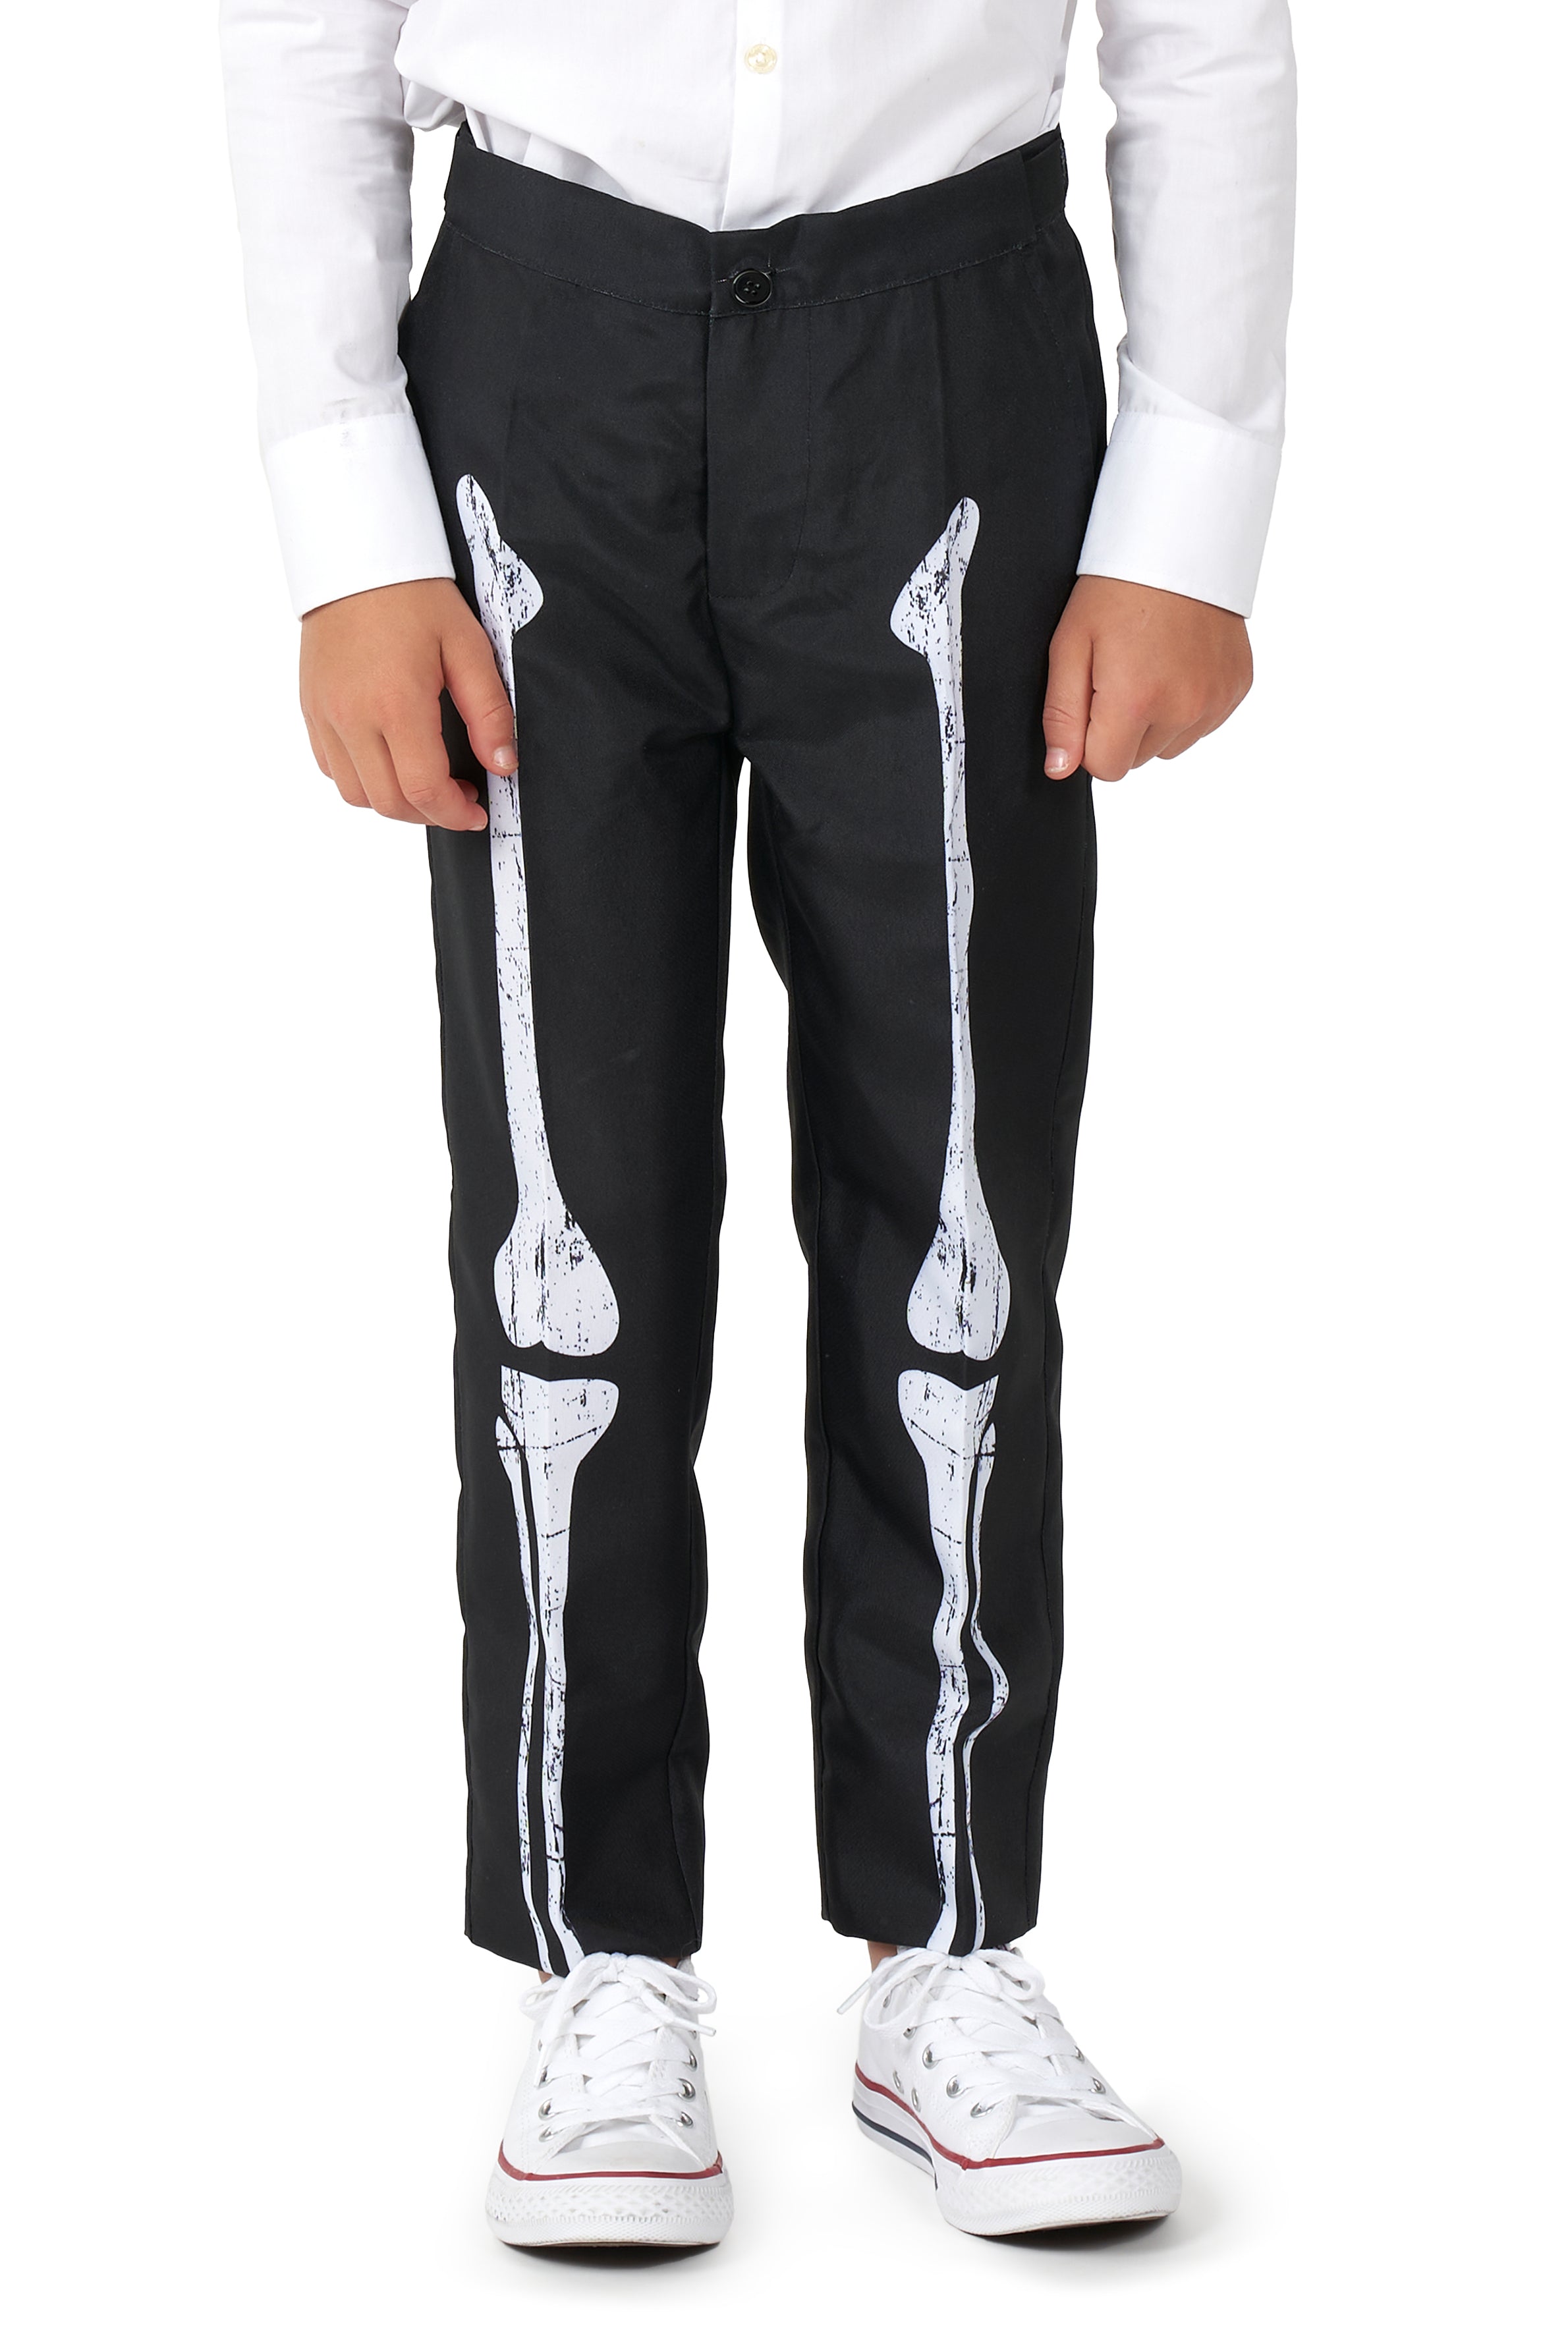 Costume Suitmeister BOYS Skeleton Grunge Black